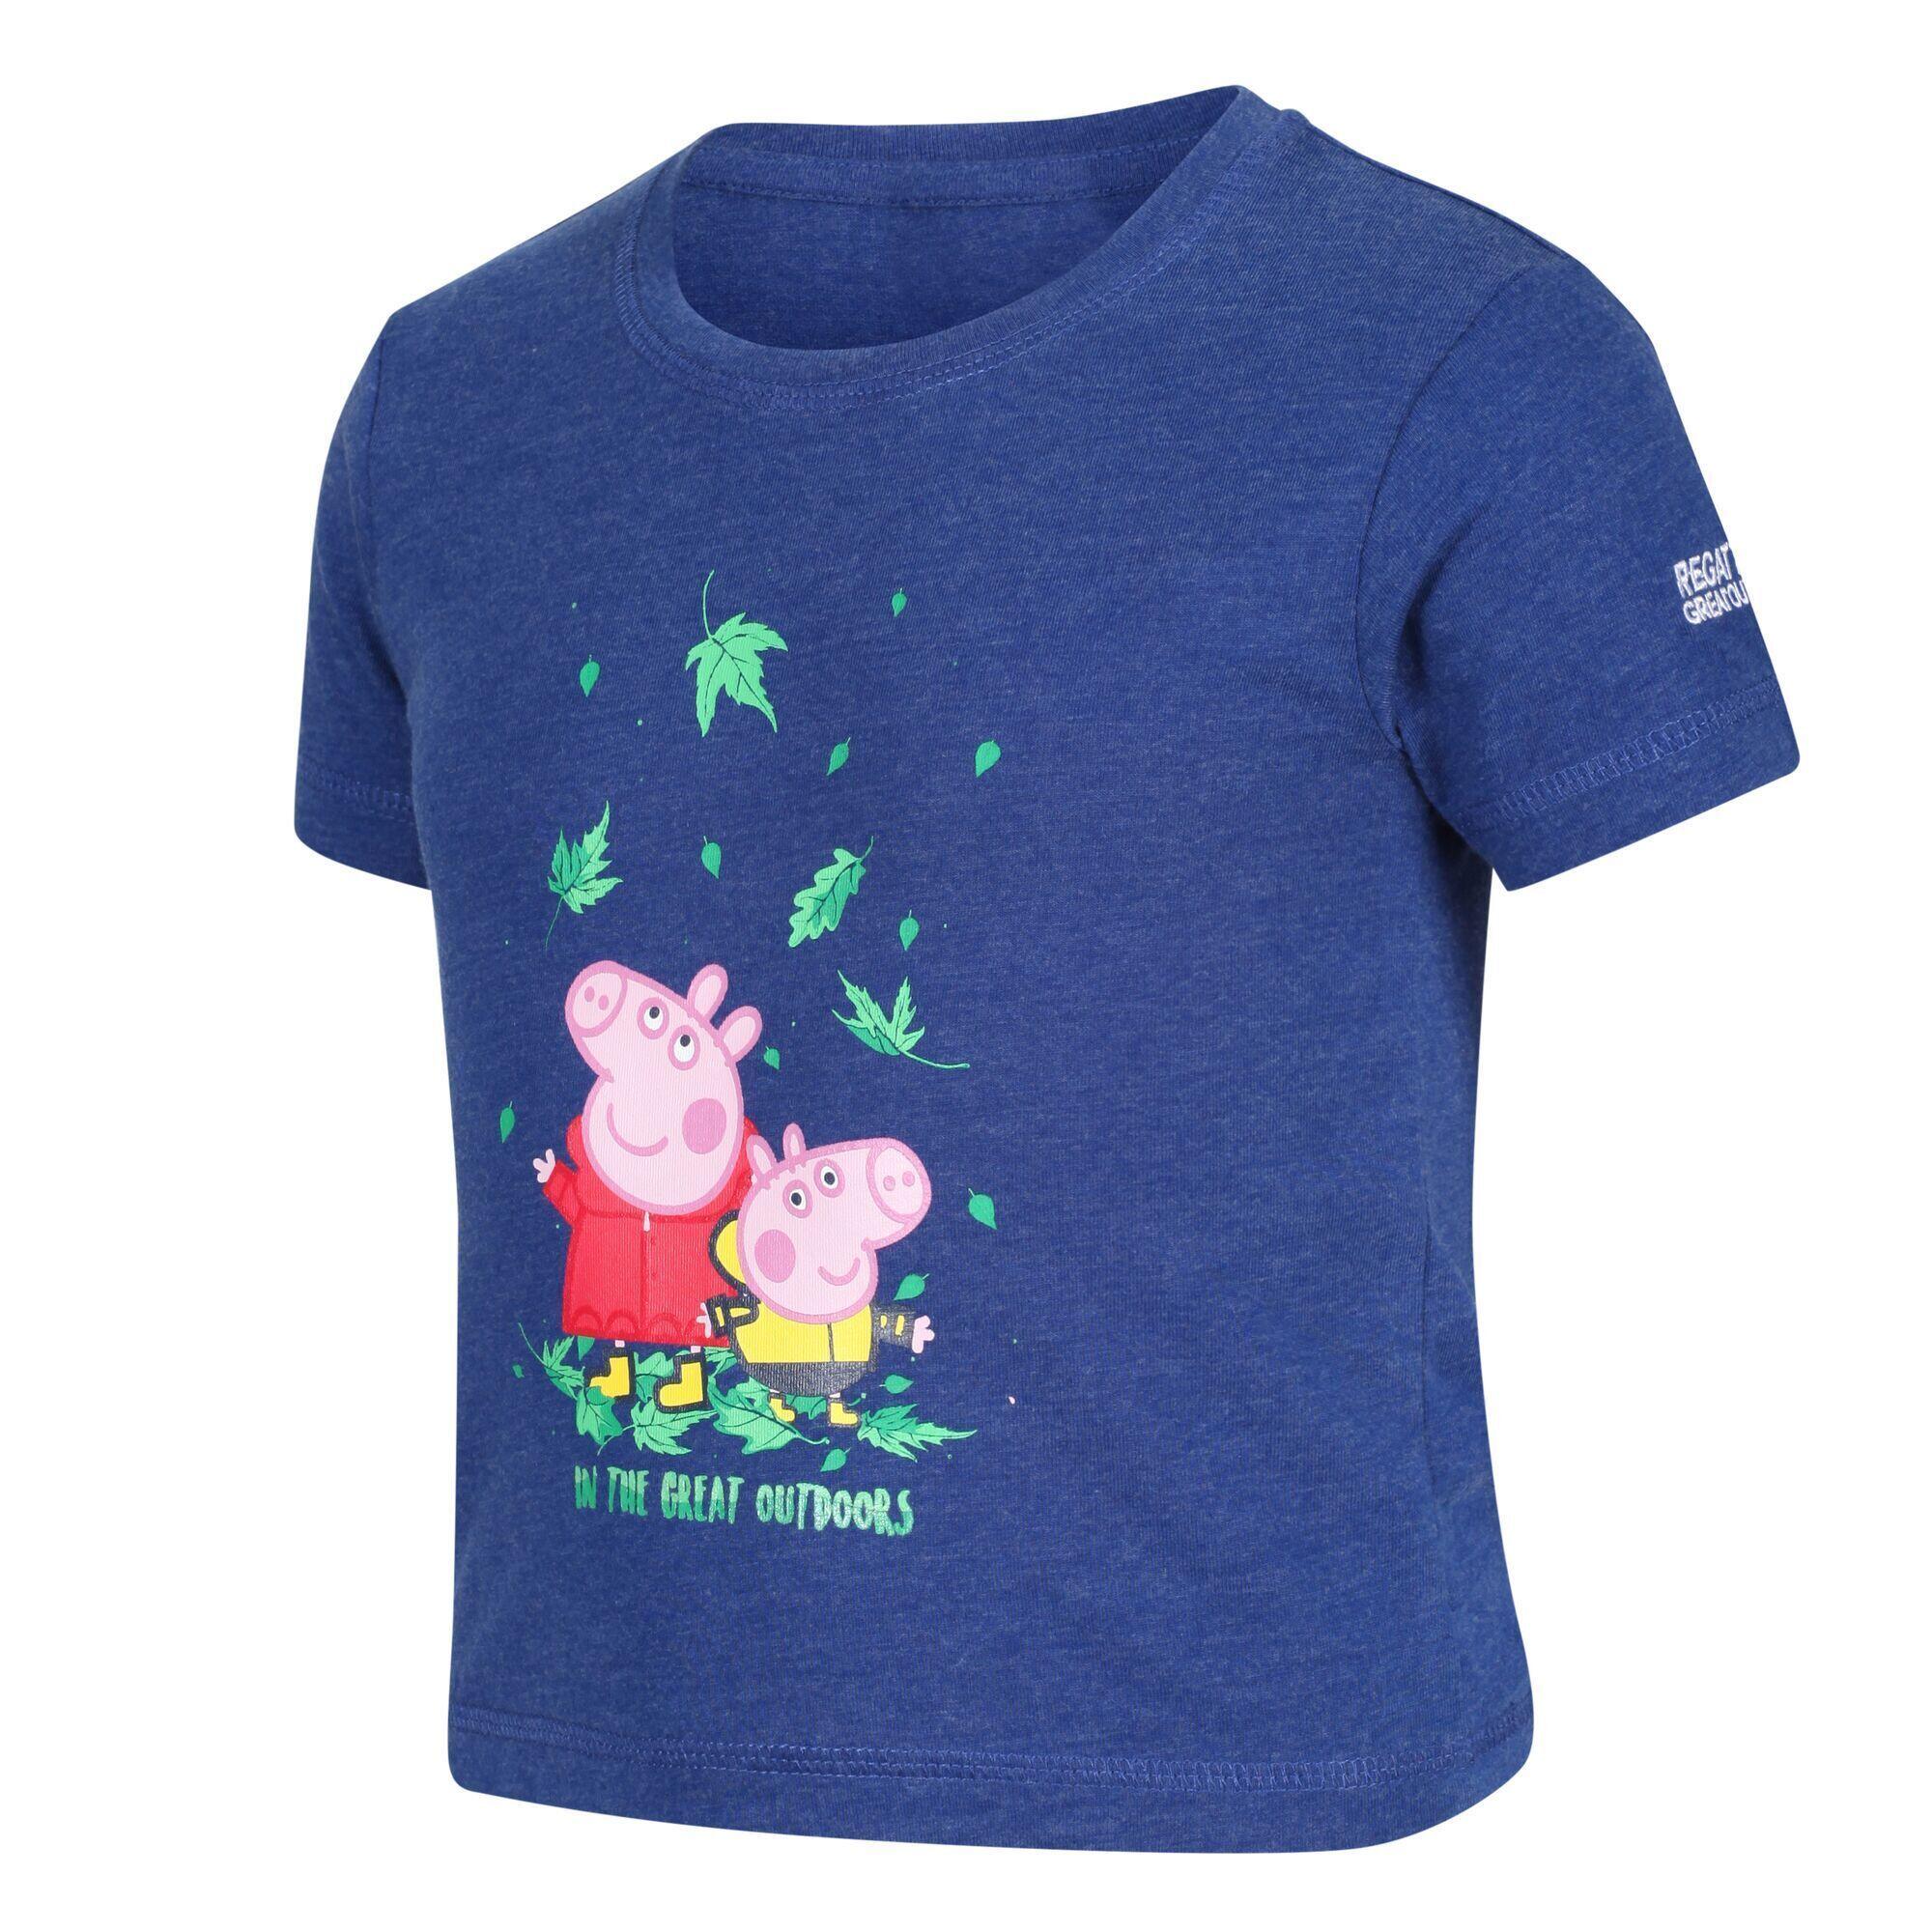 Childrens/Kids Peppa Pig Printed ShortSleeved TShirt (Royal Blue) 4/5